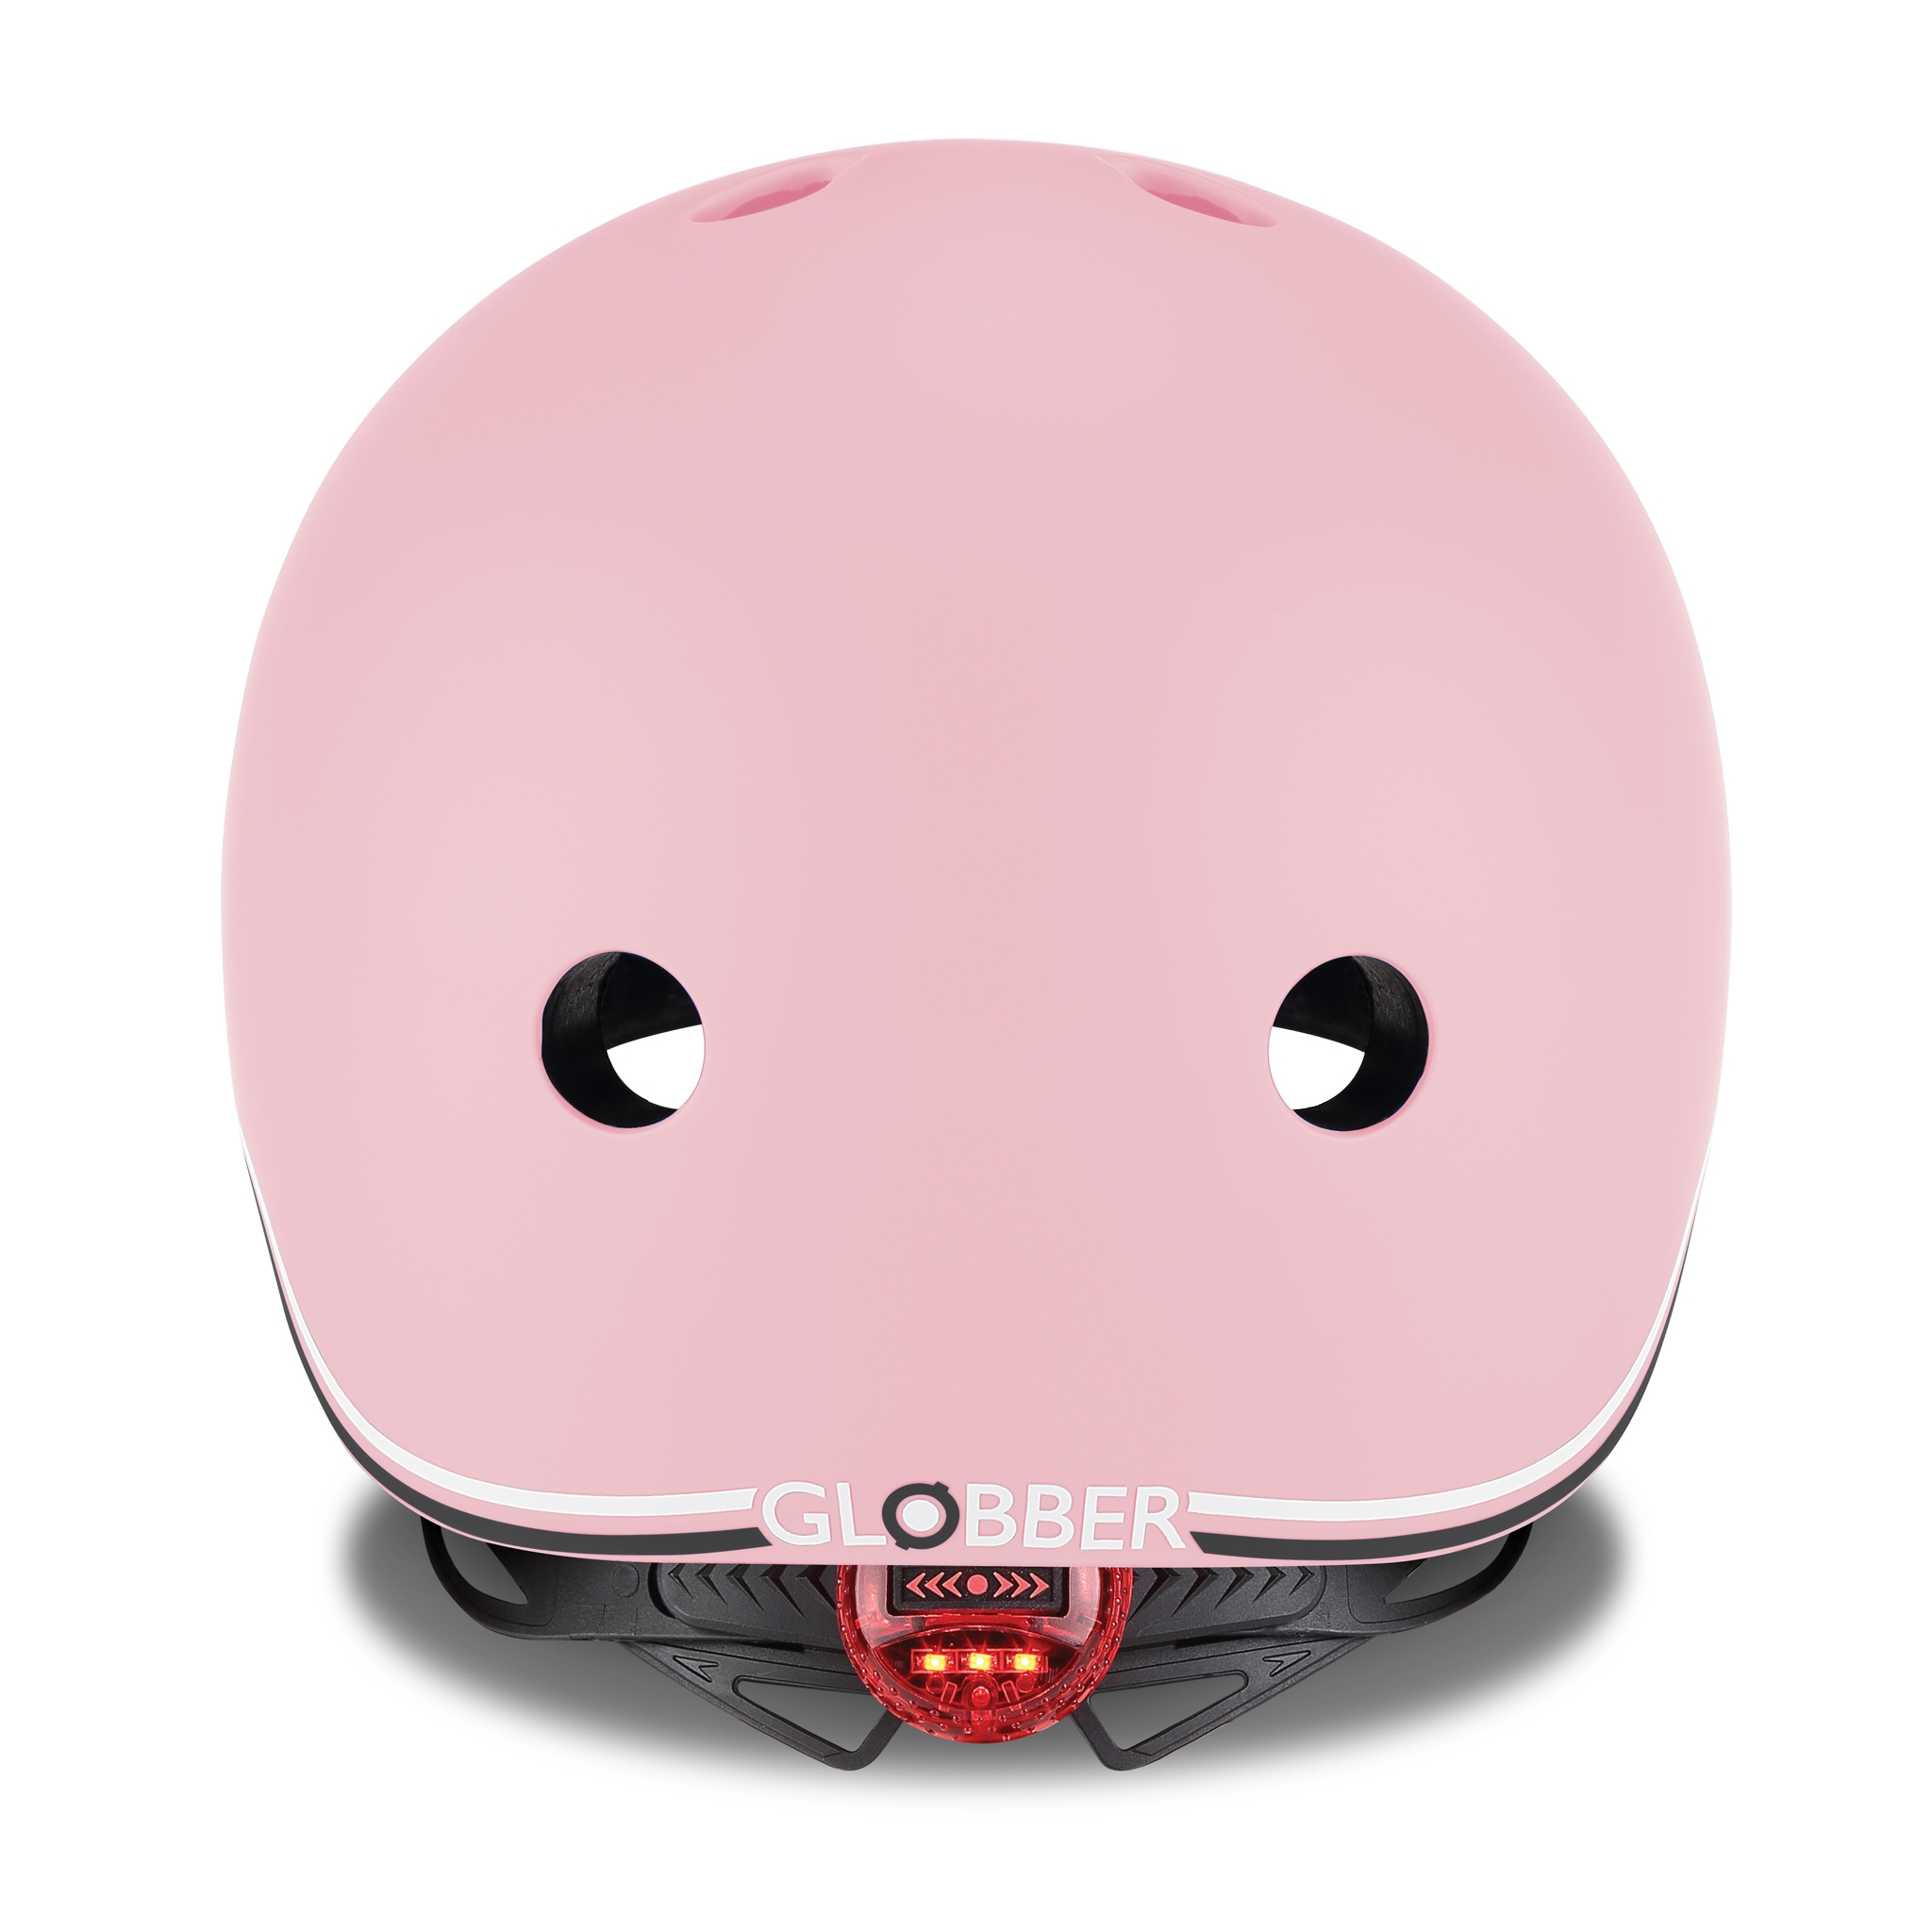 GO-UP-helmets-scooter-helmets-for-toddlers-with-LED-lights-safe-helmet-for-toddlers-pastel-pink 2